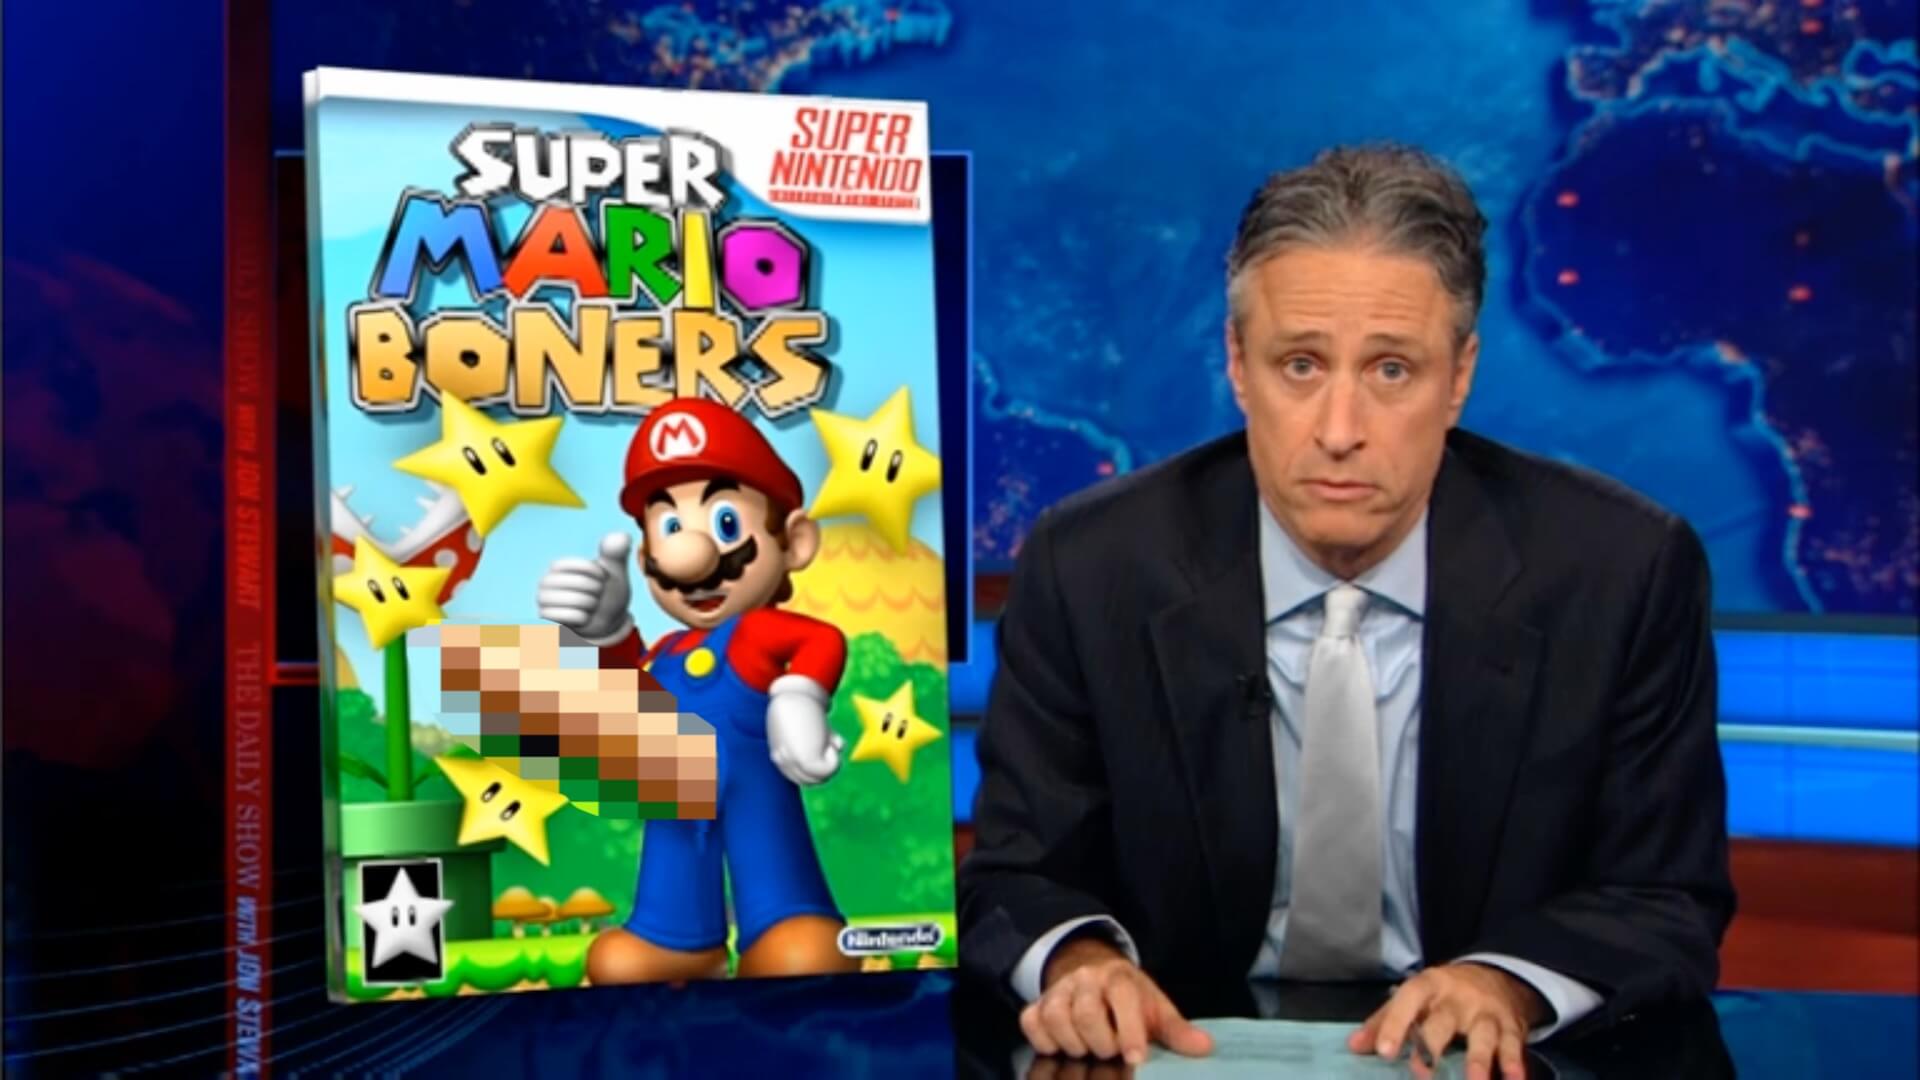 The Daily Show with Jon Stewart "Super Mario Boner"